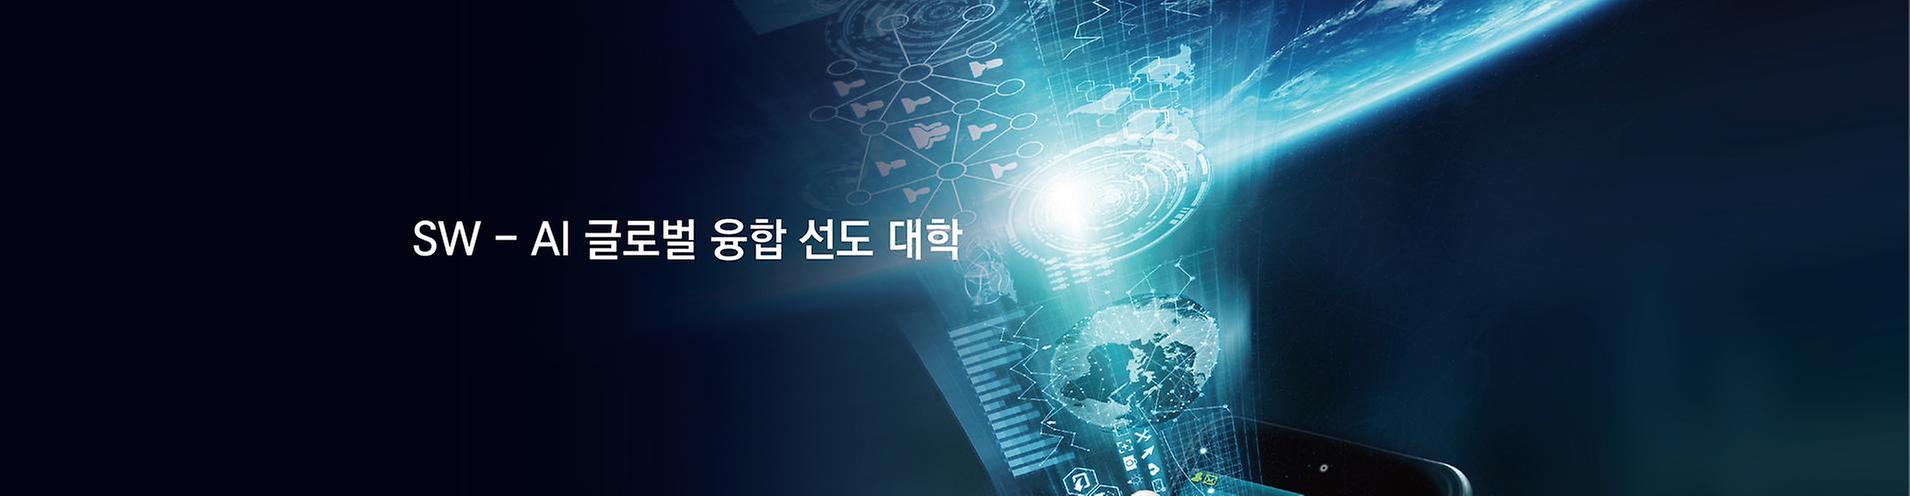 SW-AI 글로벌 융합 선도 대학